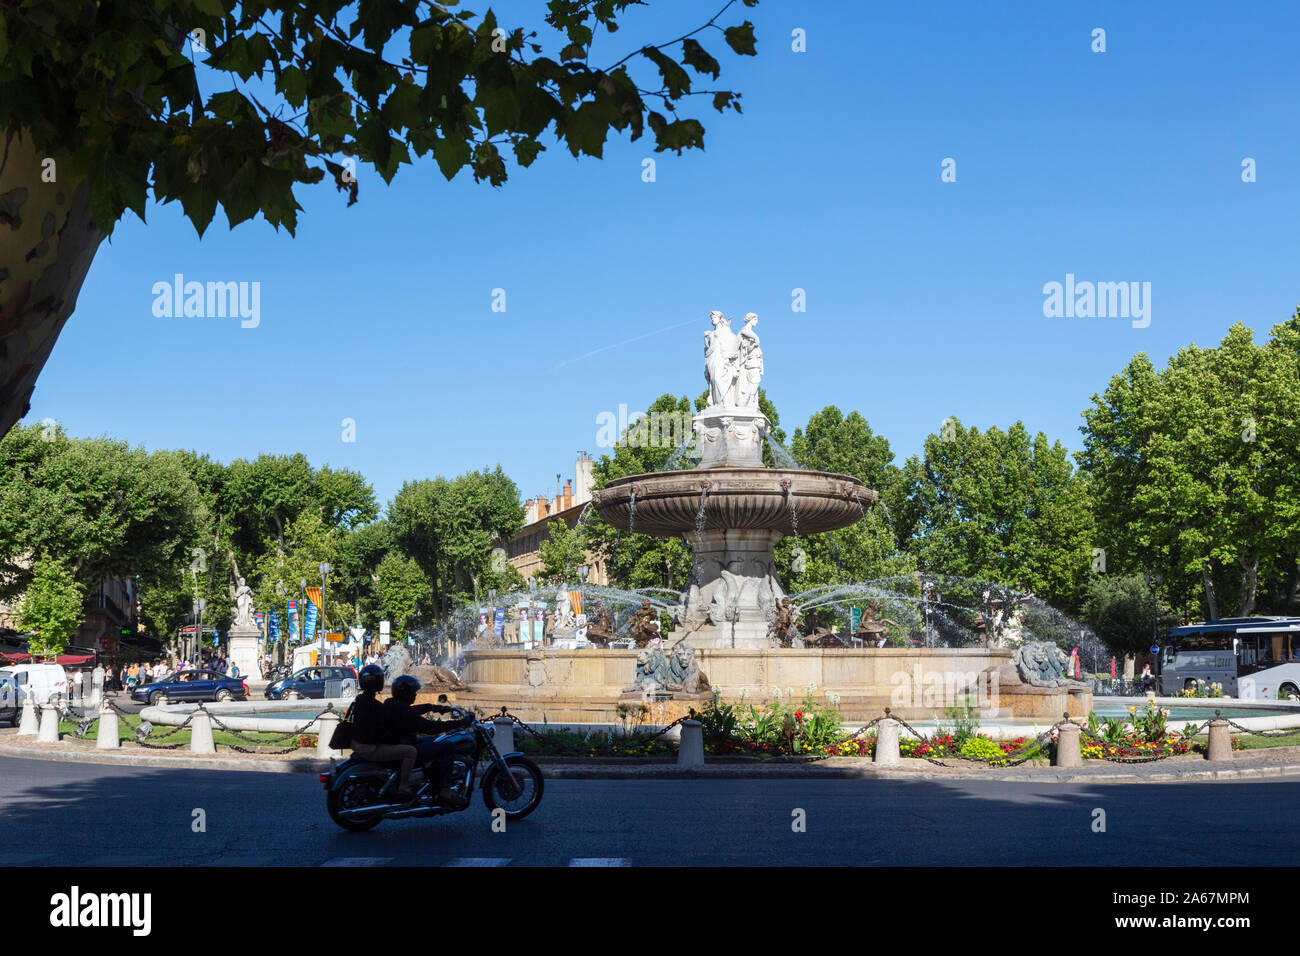 Die Fontaine de la Rotonde in der Place de la Rotonde, Aix-en-Provence, Provence-Alpes-Côte d'Azur, Frankreich. Der Platz wurde in den 1840er Jahren gebaut. Die Stockfoto